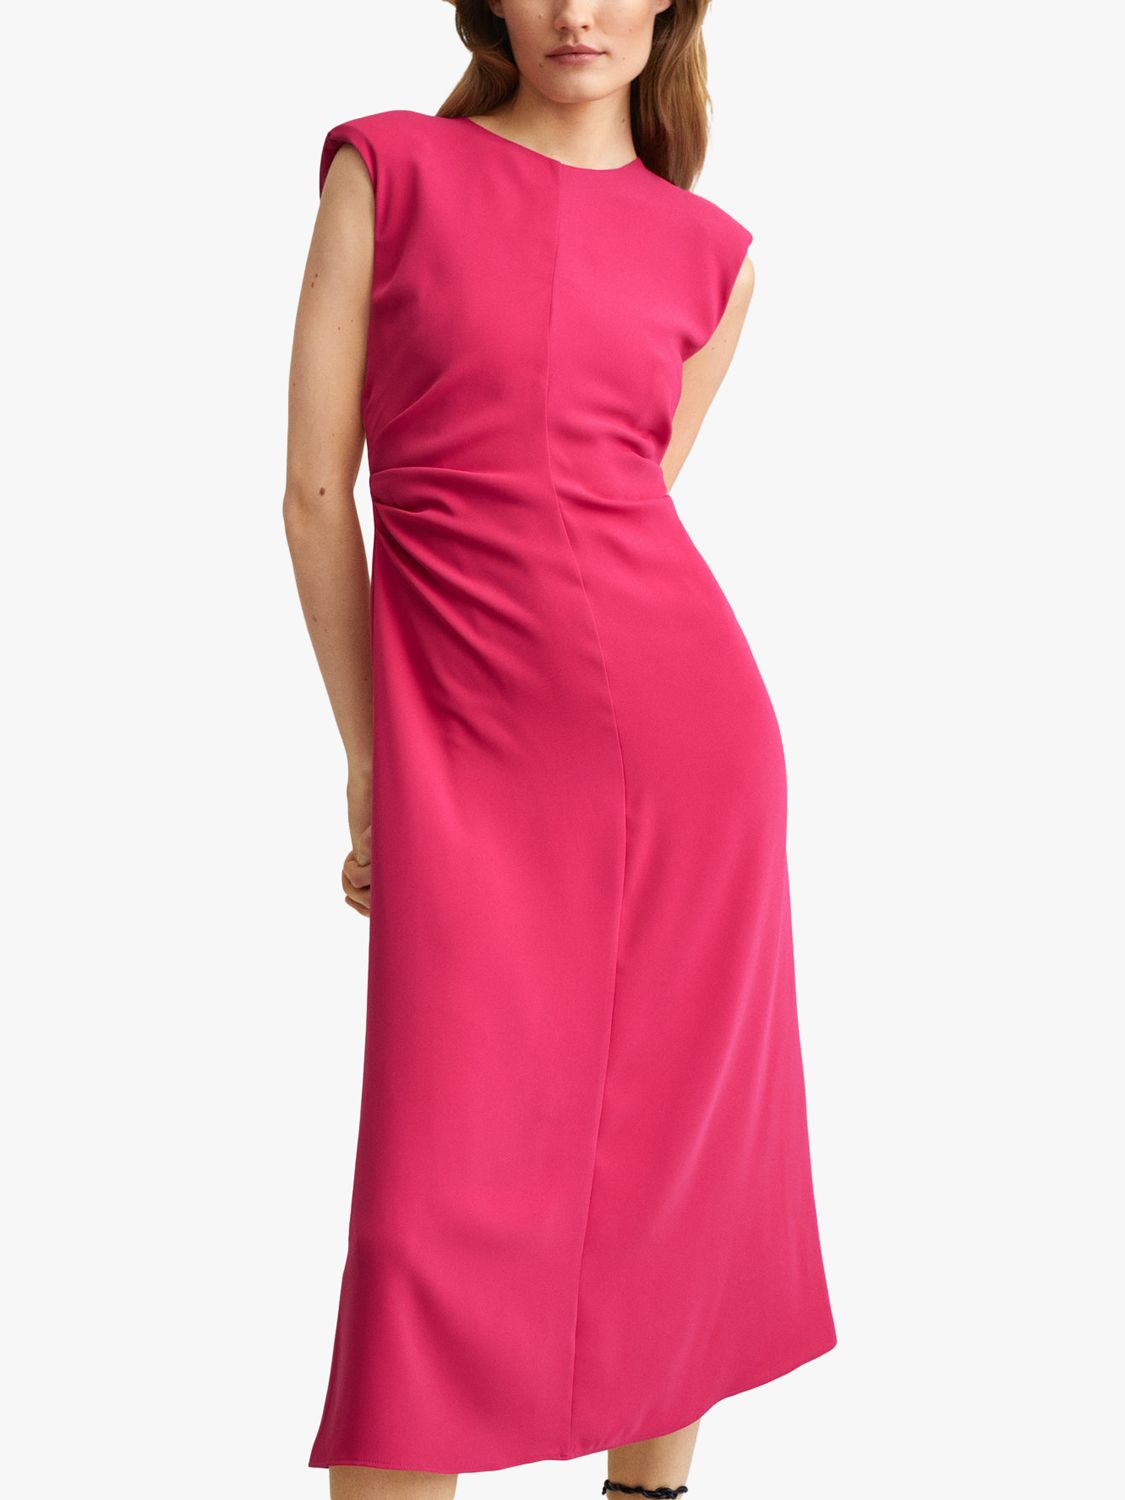 Mango Delia Gathered Midi Dress, Bright Pink at John Lewis \u0026 Partners